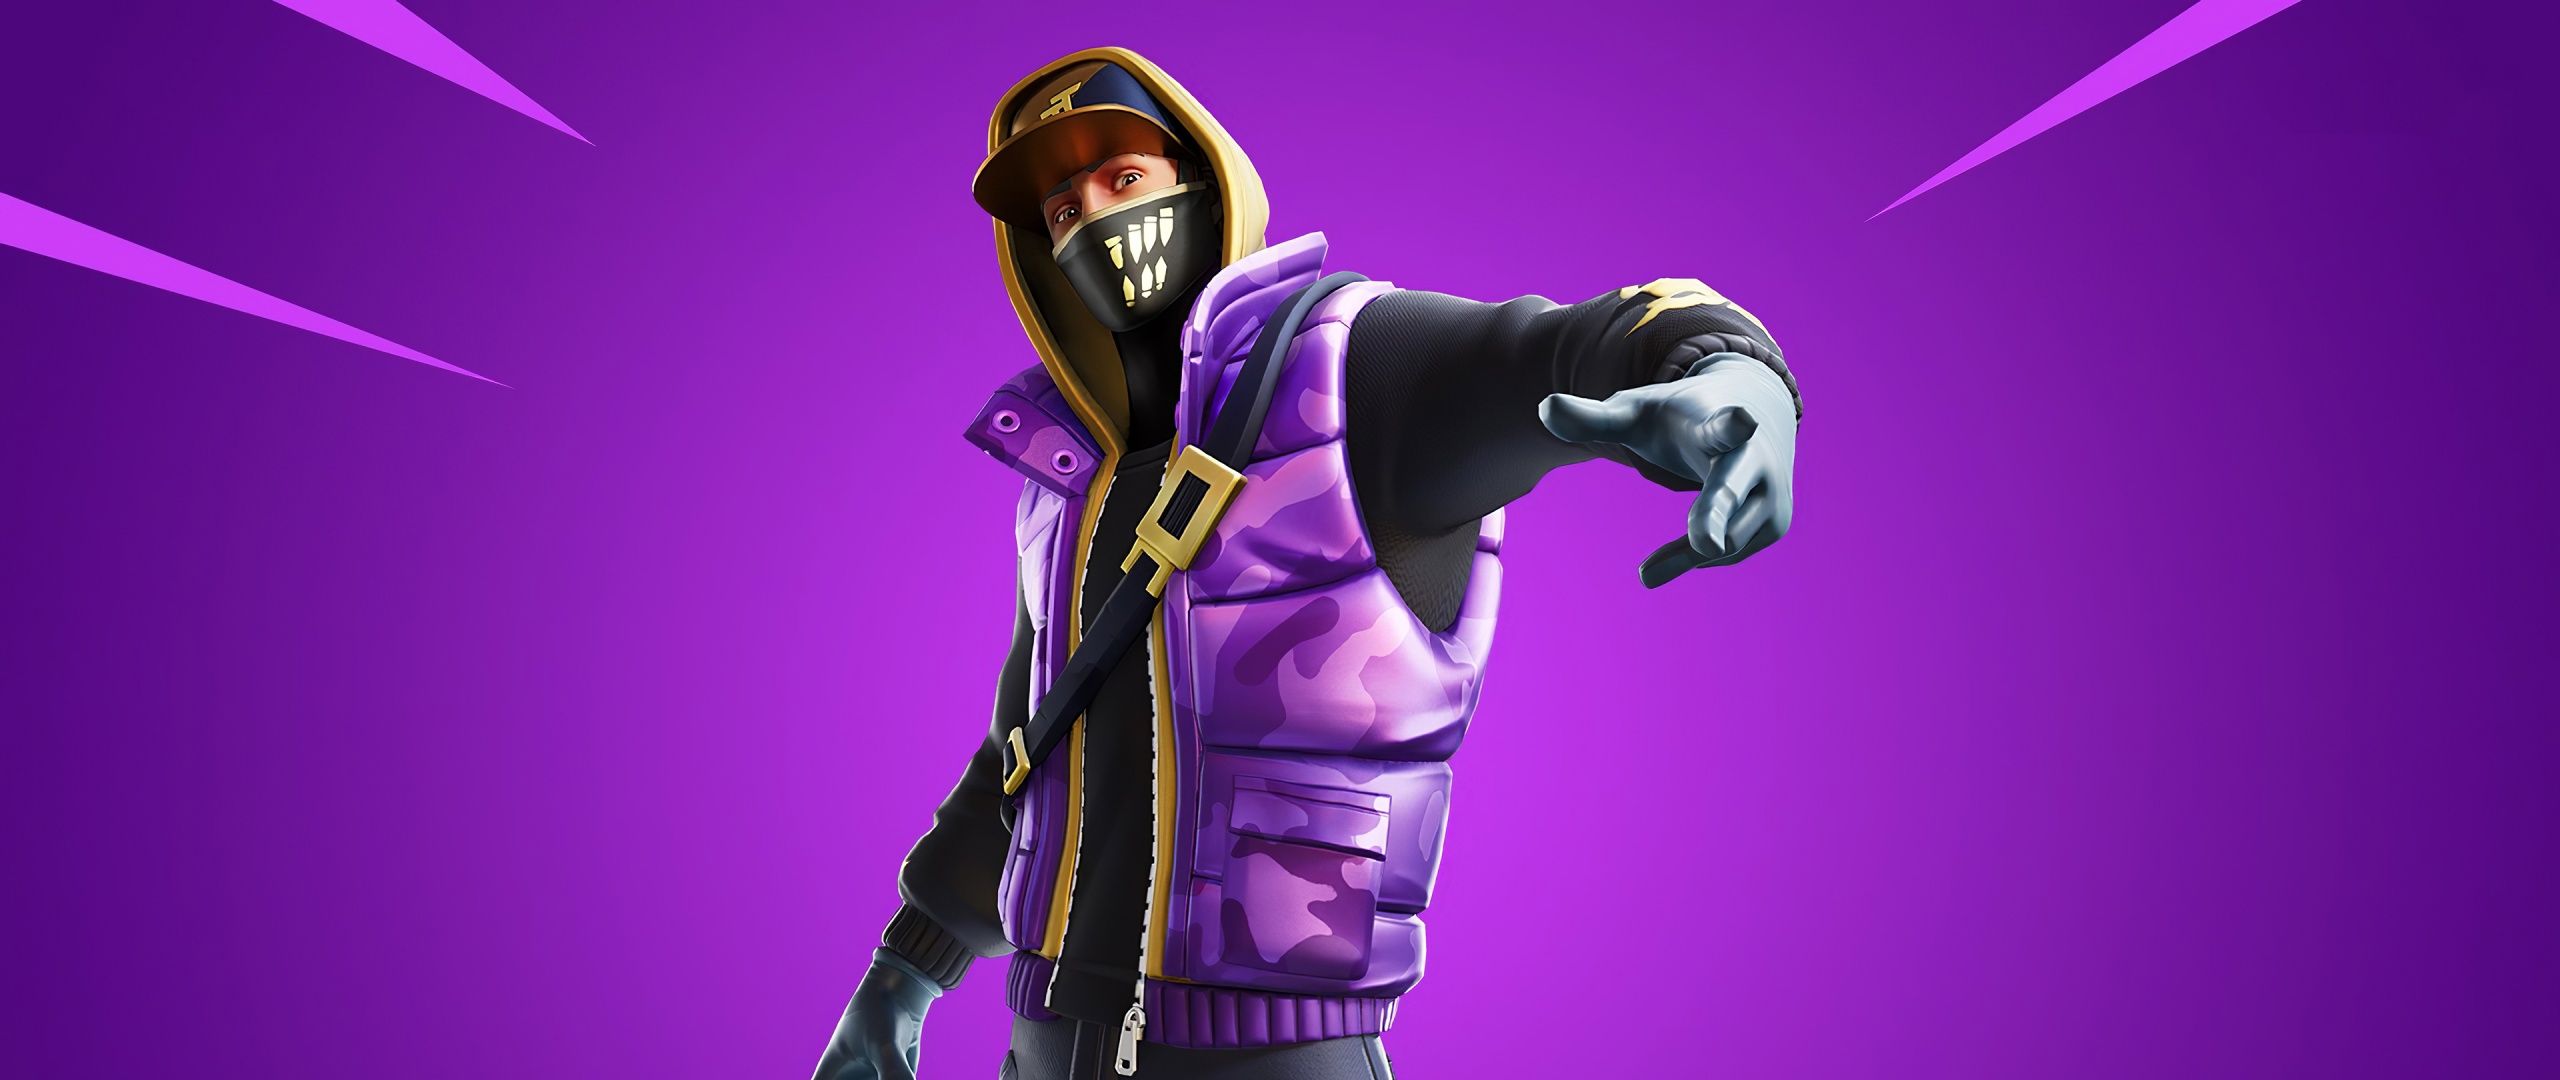 Fortnite character in a purple jacket with a hood - Fortnite